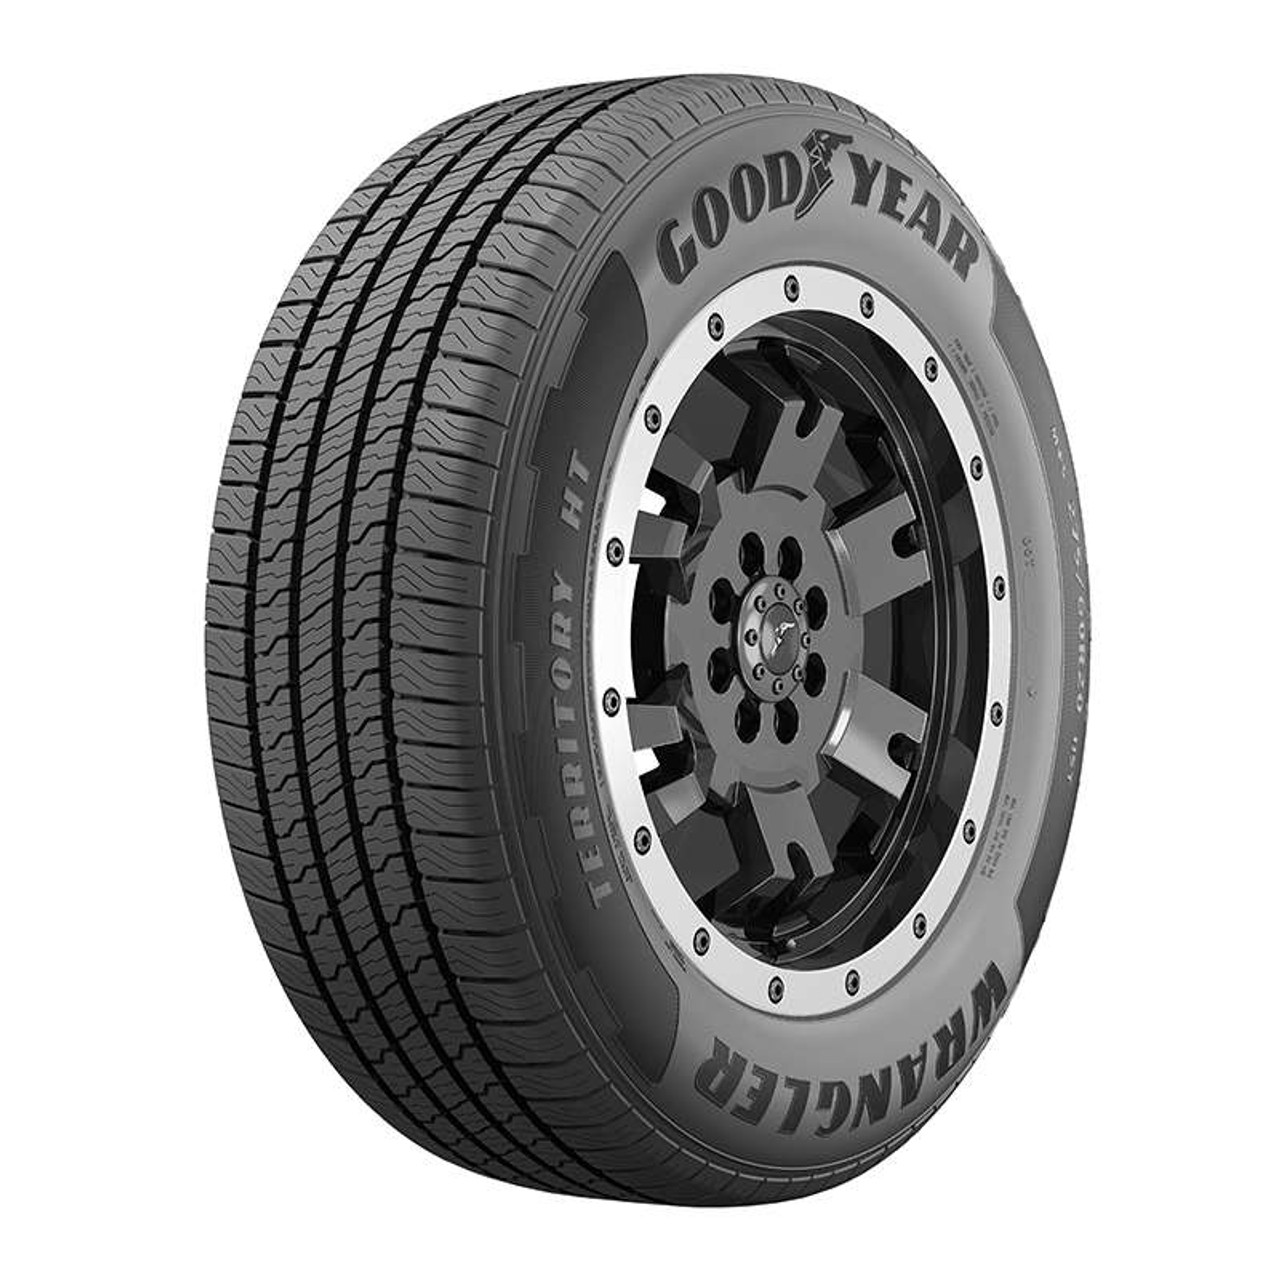 Goodyear Wrangler Territory HT 255/65R17 Tires | 827017973 | 255 65 17 Tire